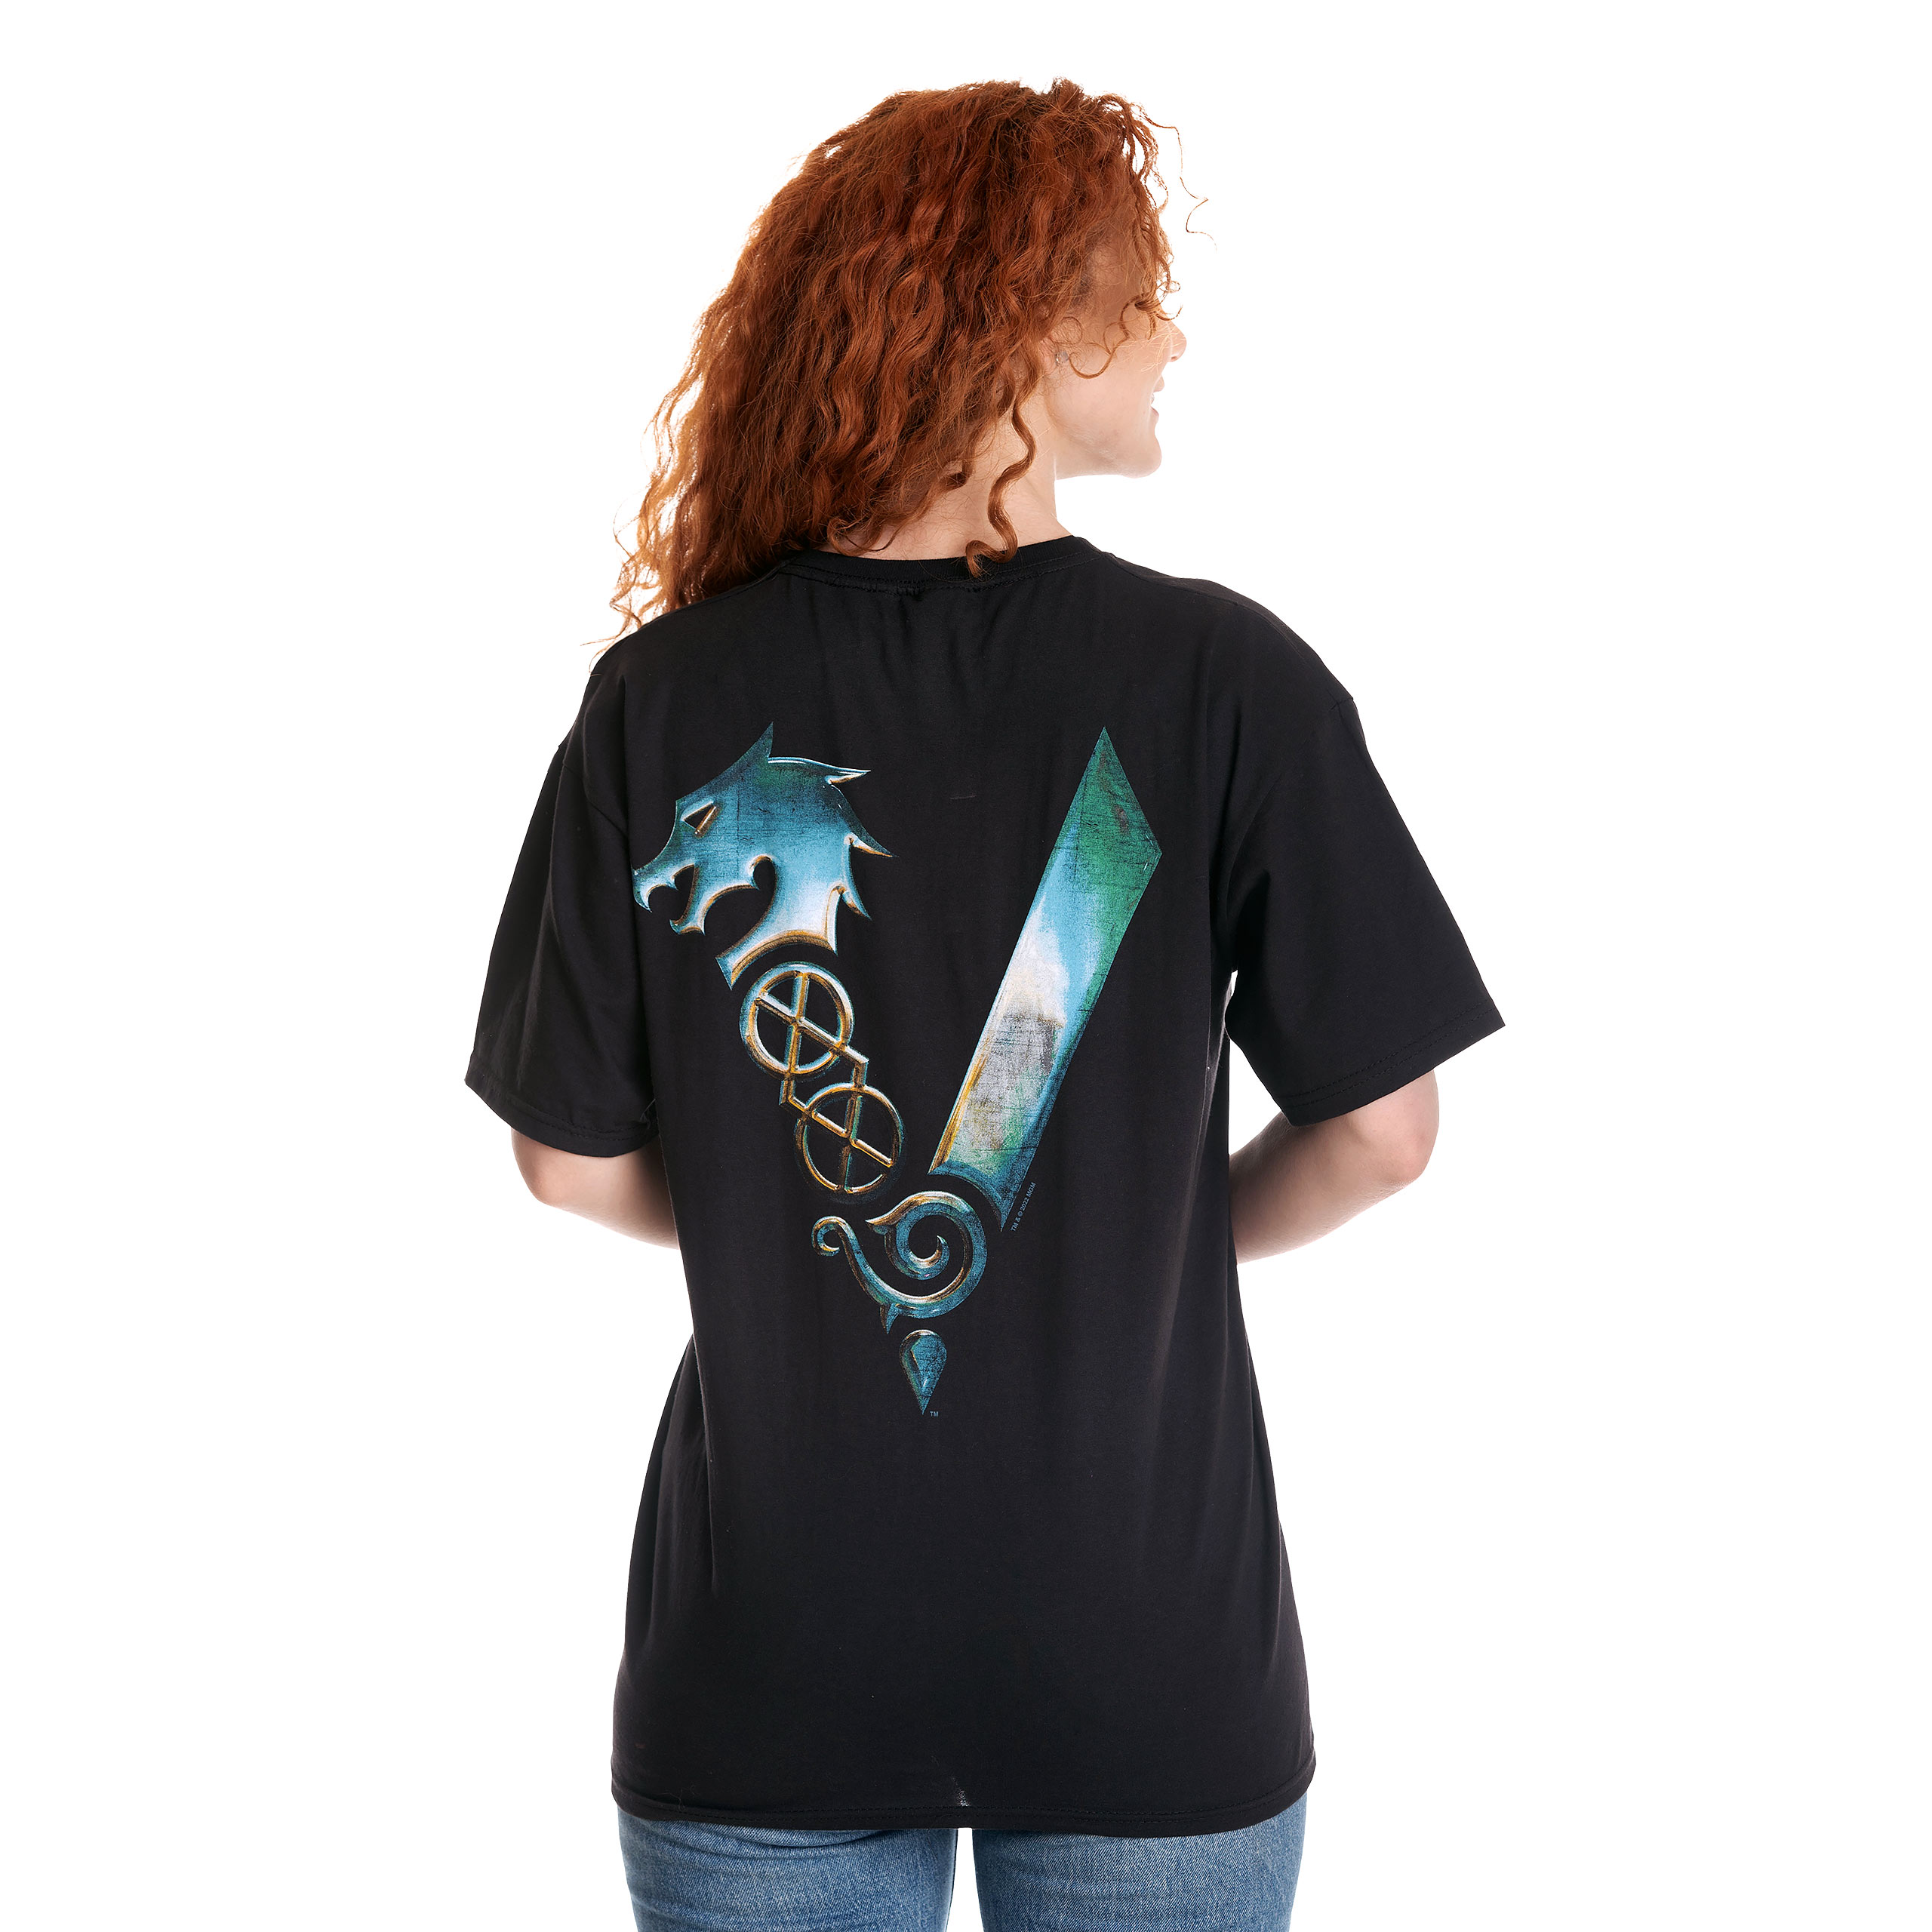 Vikings - Metallic T-Shirt Black